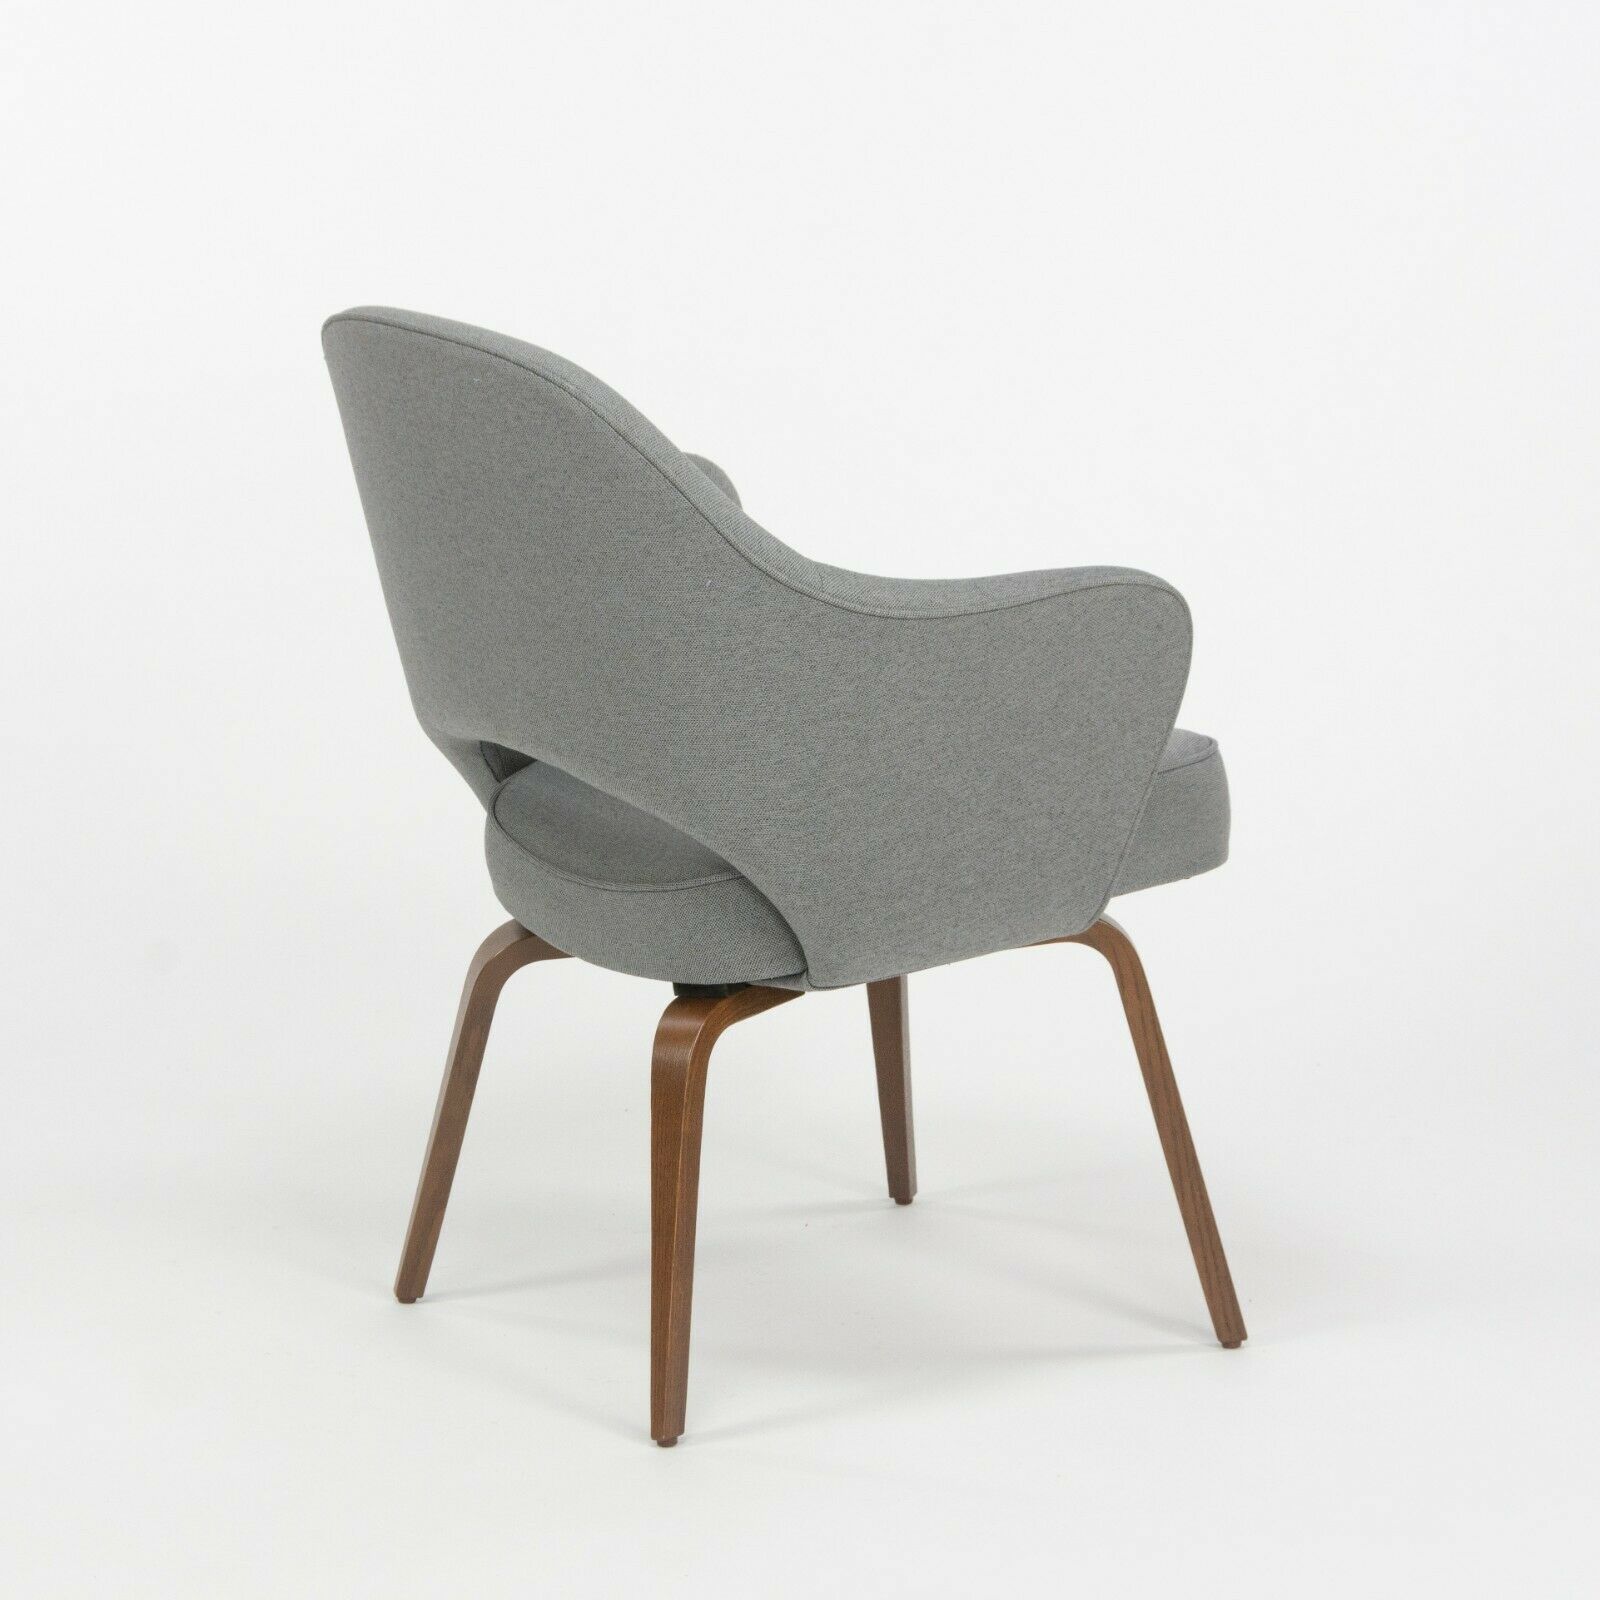 SOLD Eero Saarinen for Knoll 2020 Grey Fabric Executive Armchair with Wooden Legs